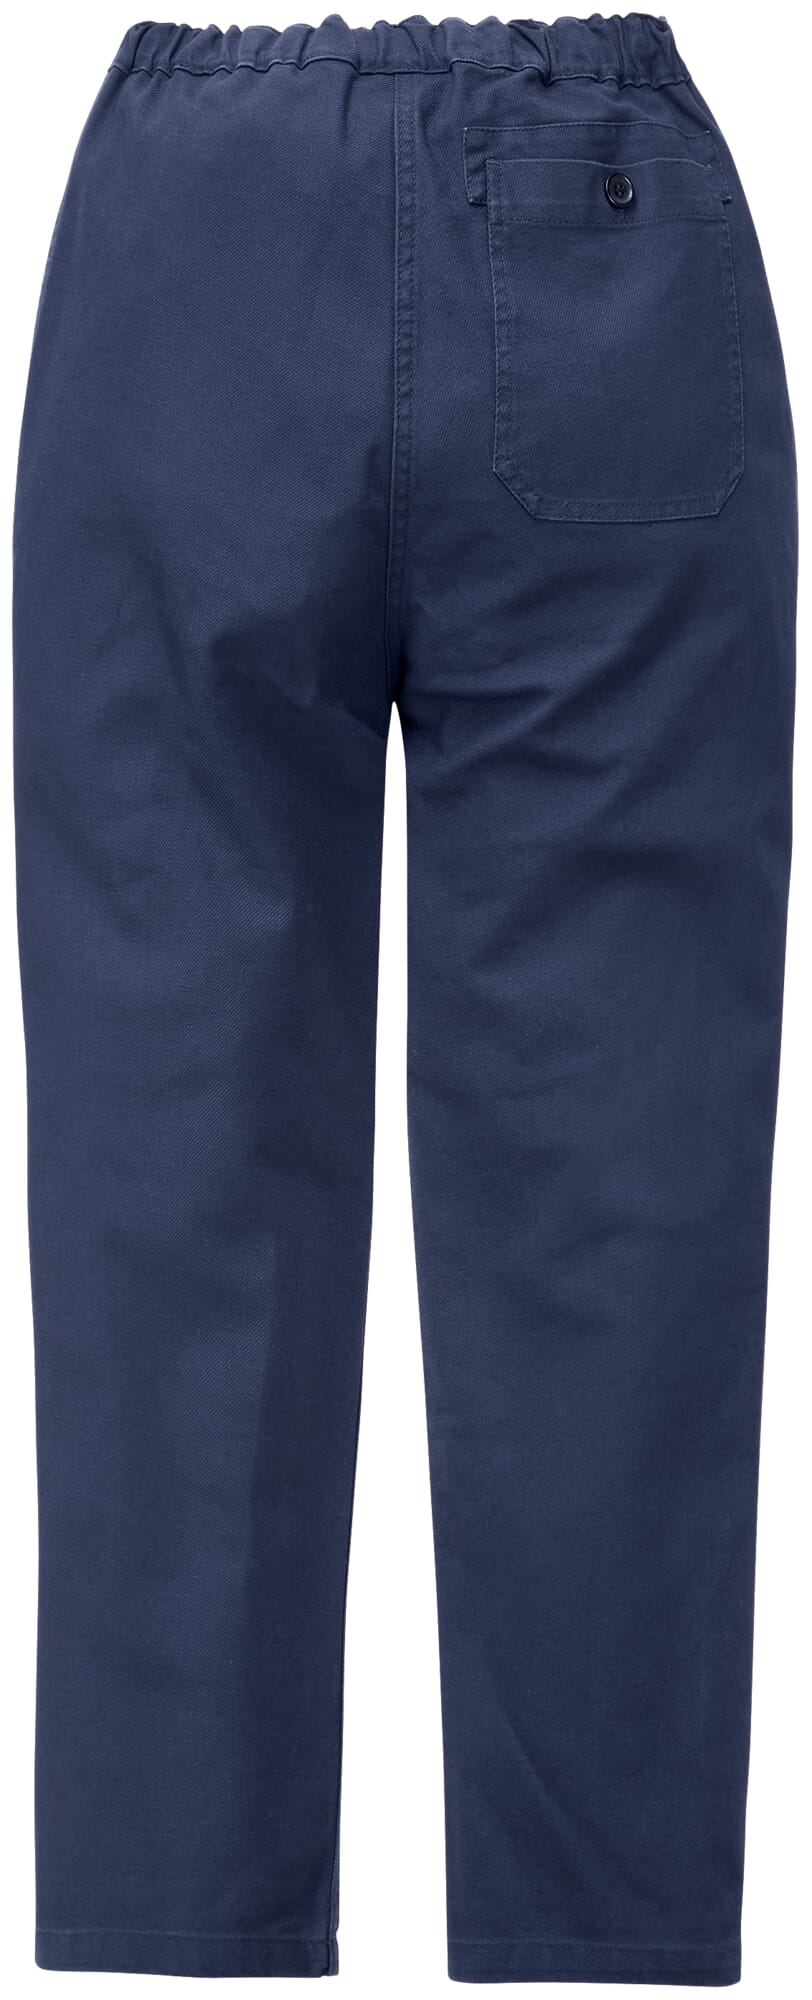 Ladies cotton pants, Dark blue